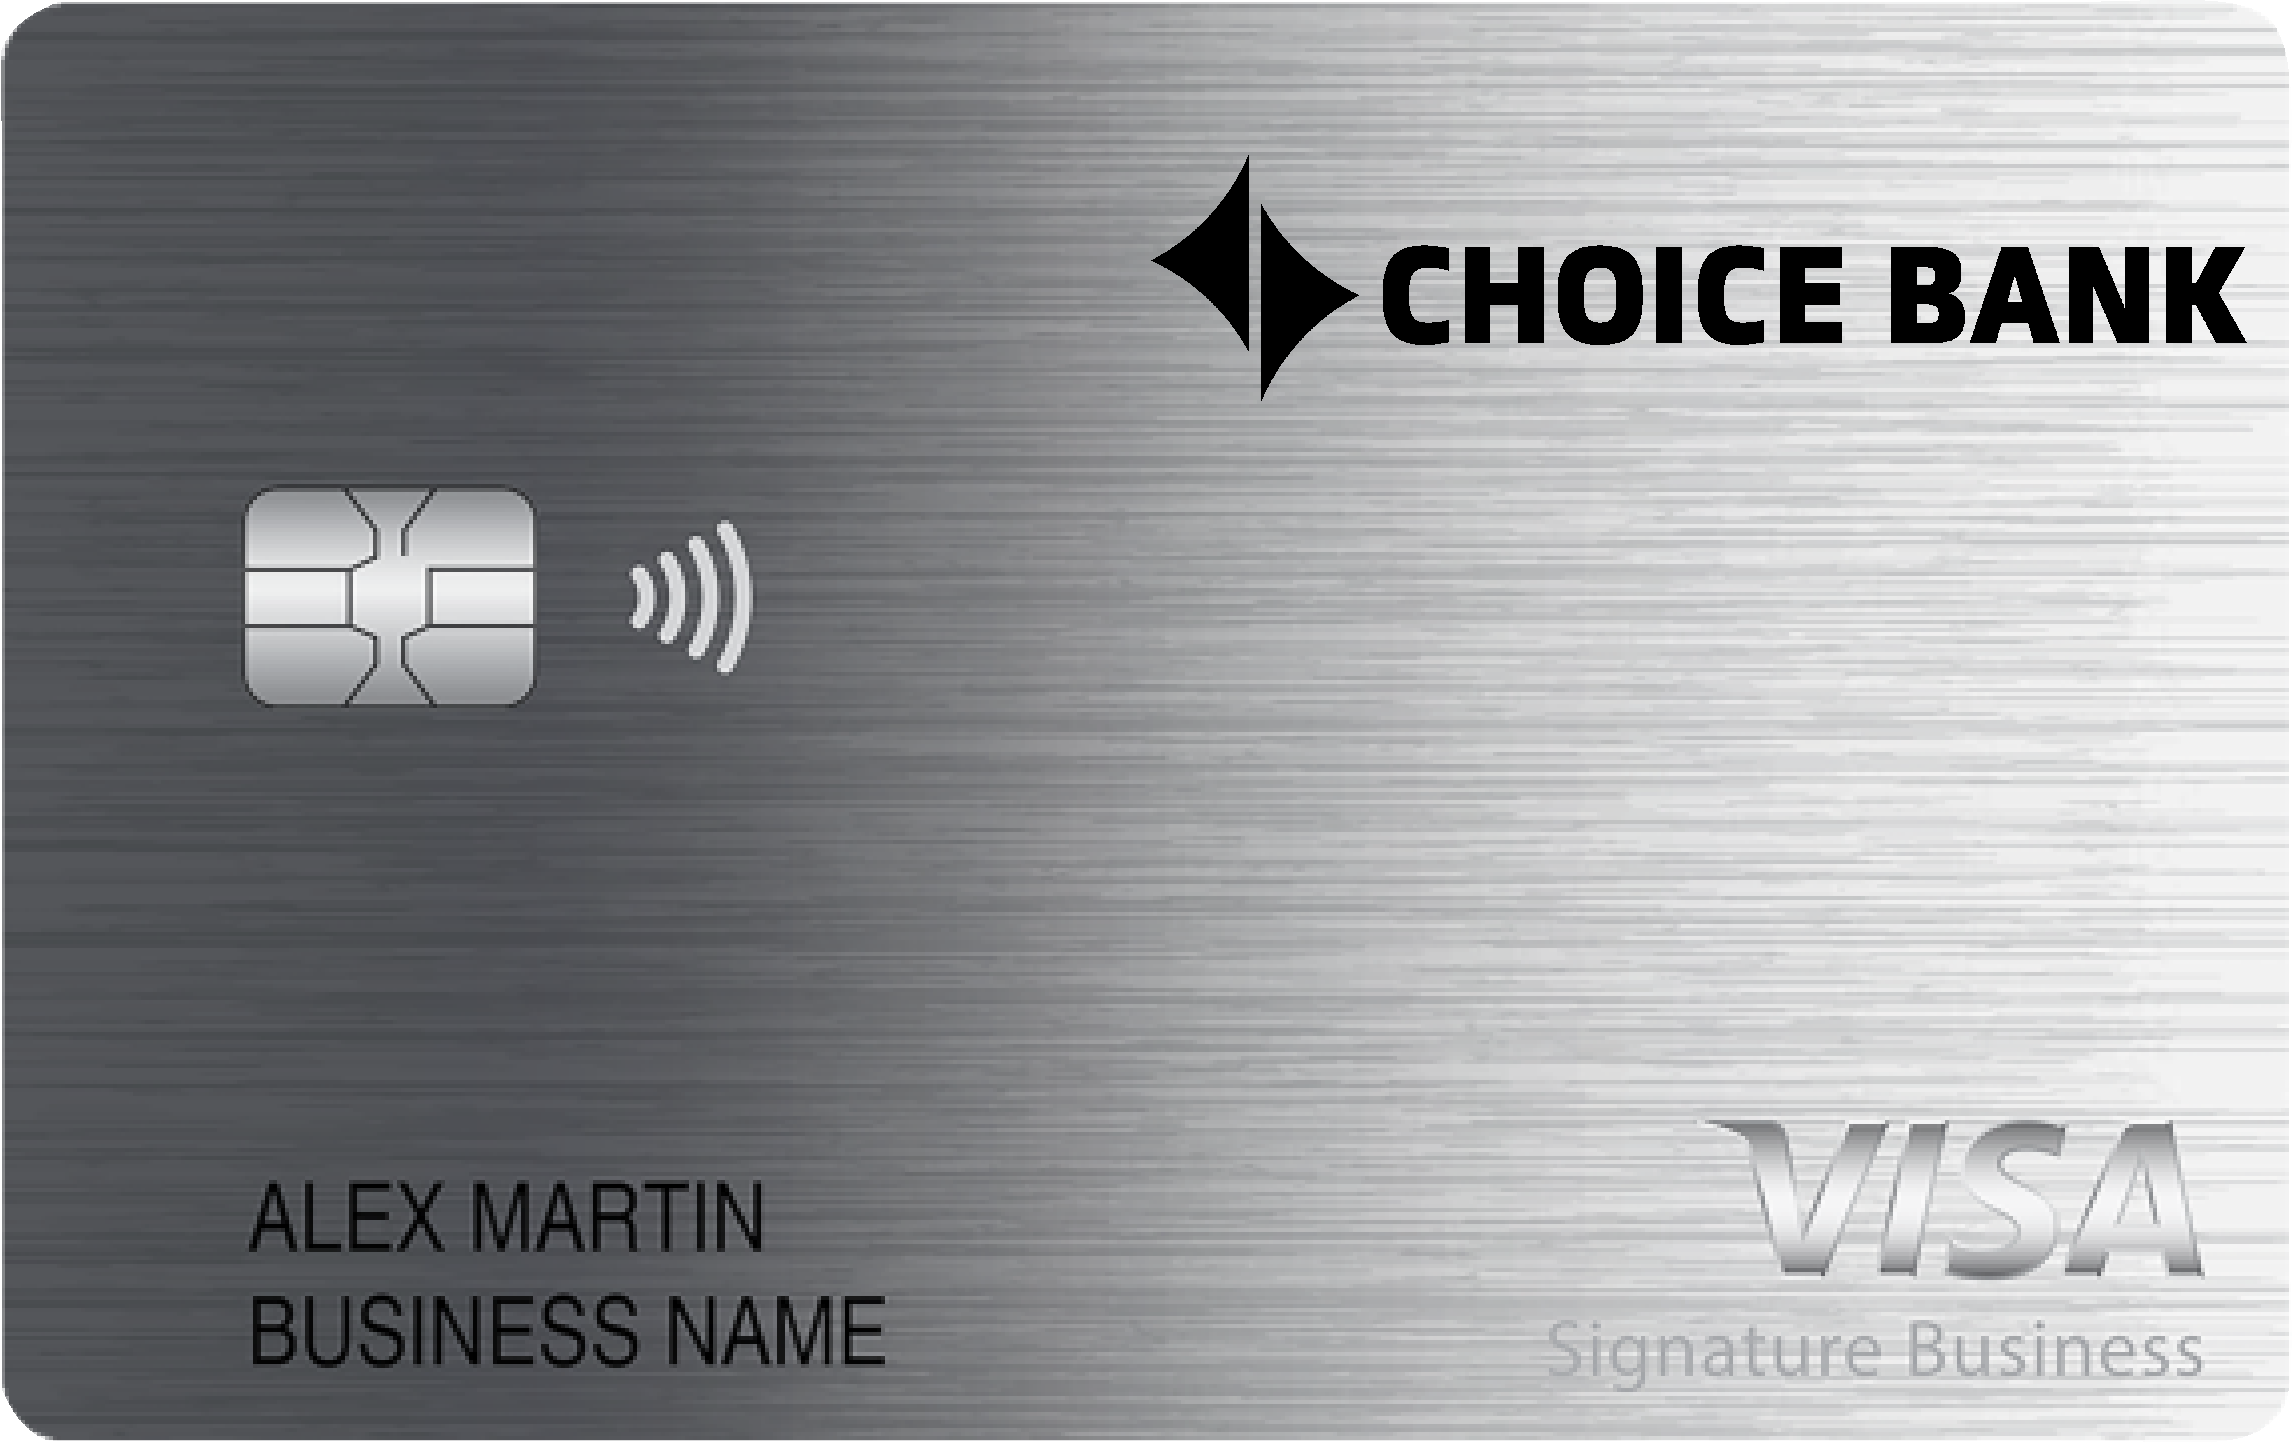 Choice Bank Smart Business Rewards Card